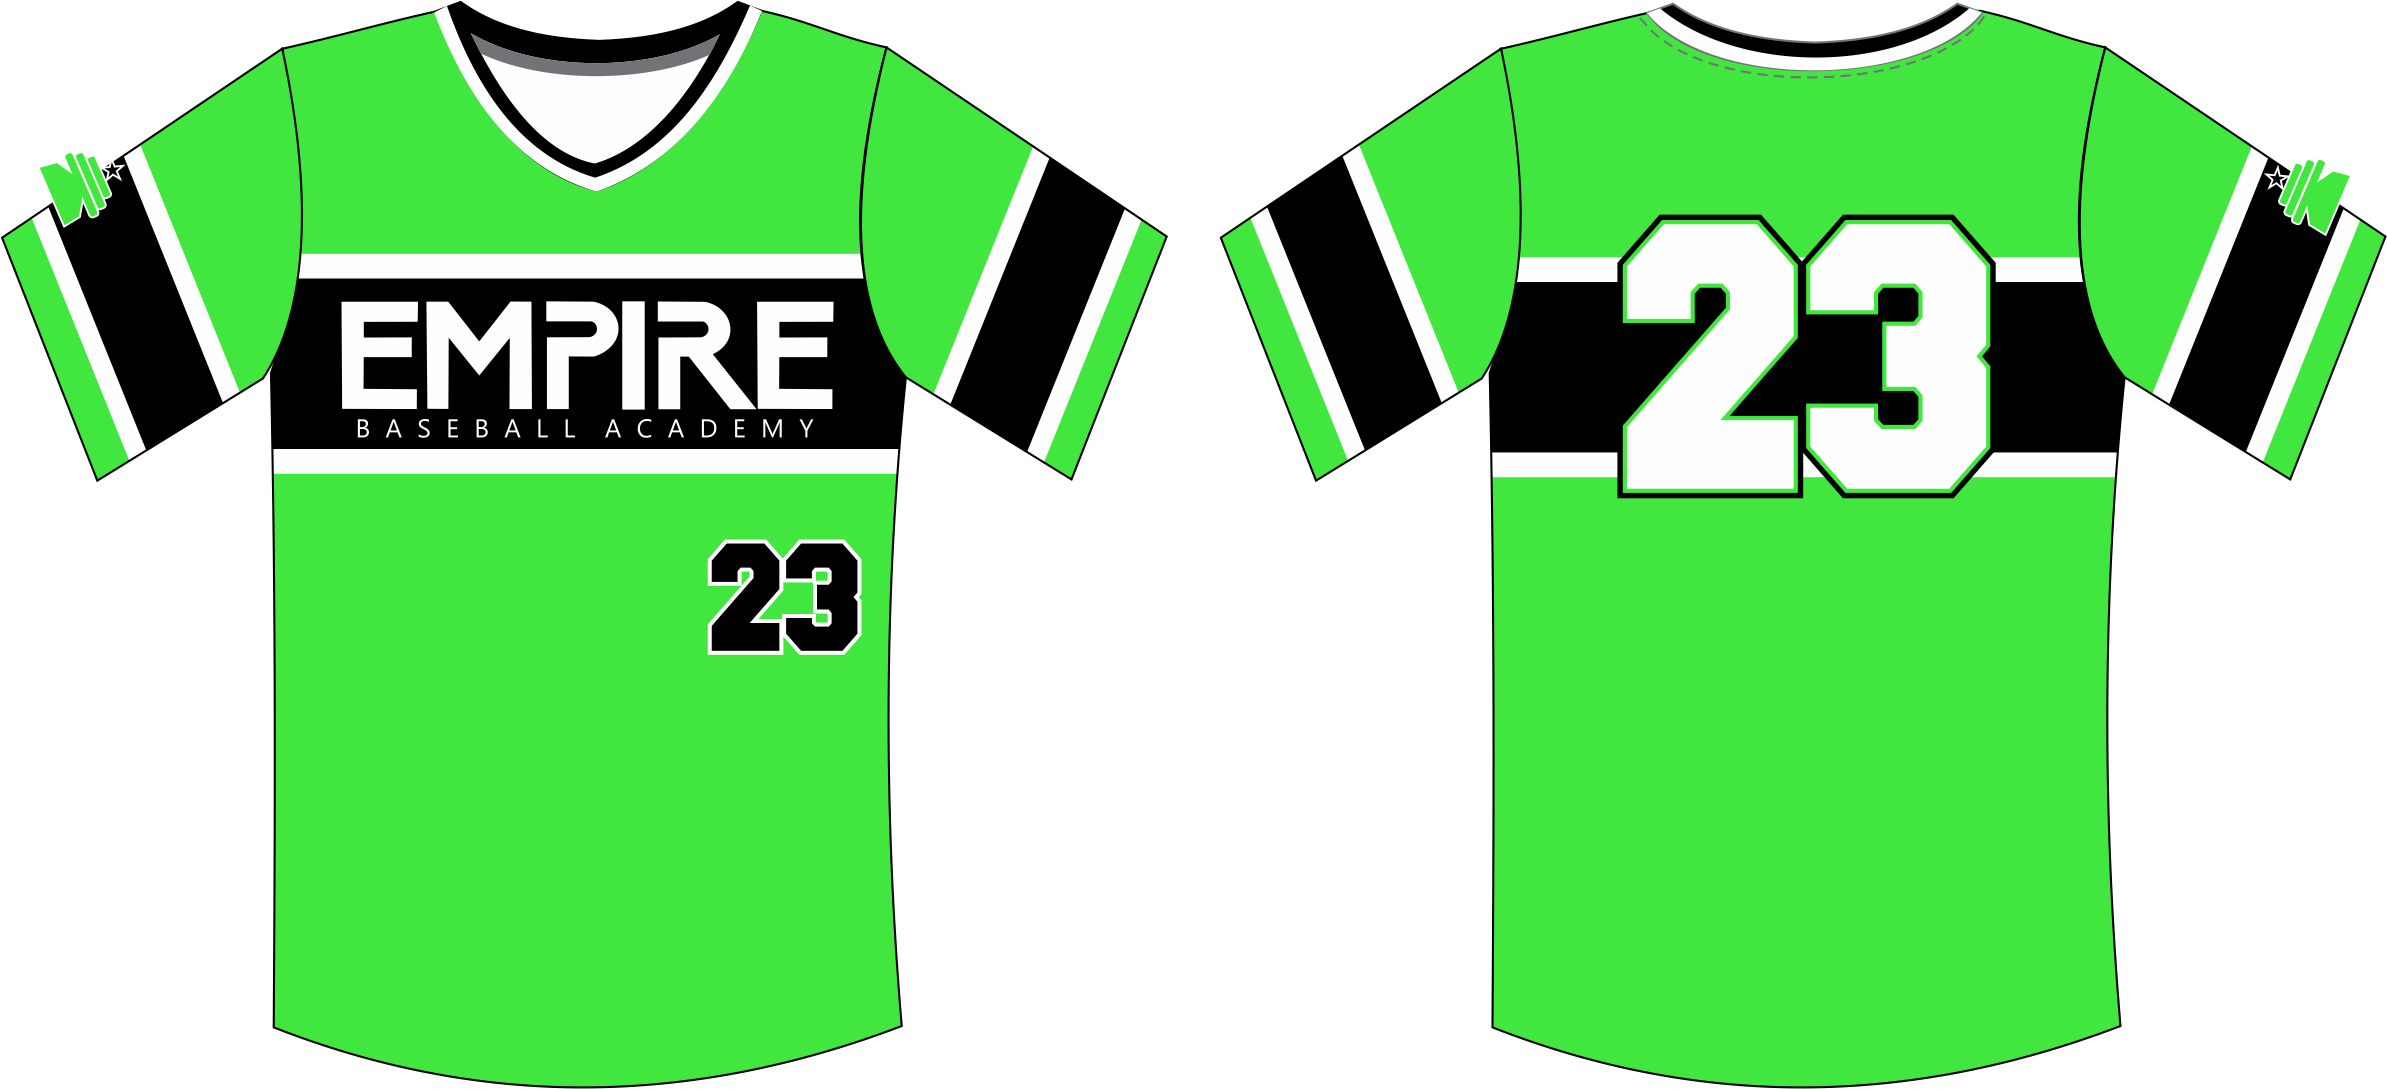 Empire baseball academy Game jersey 1